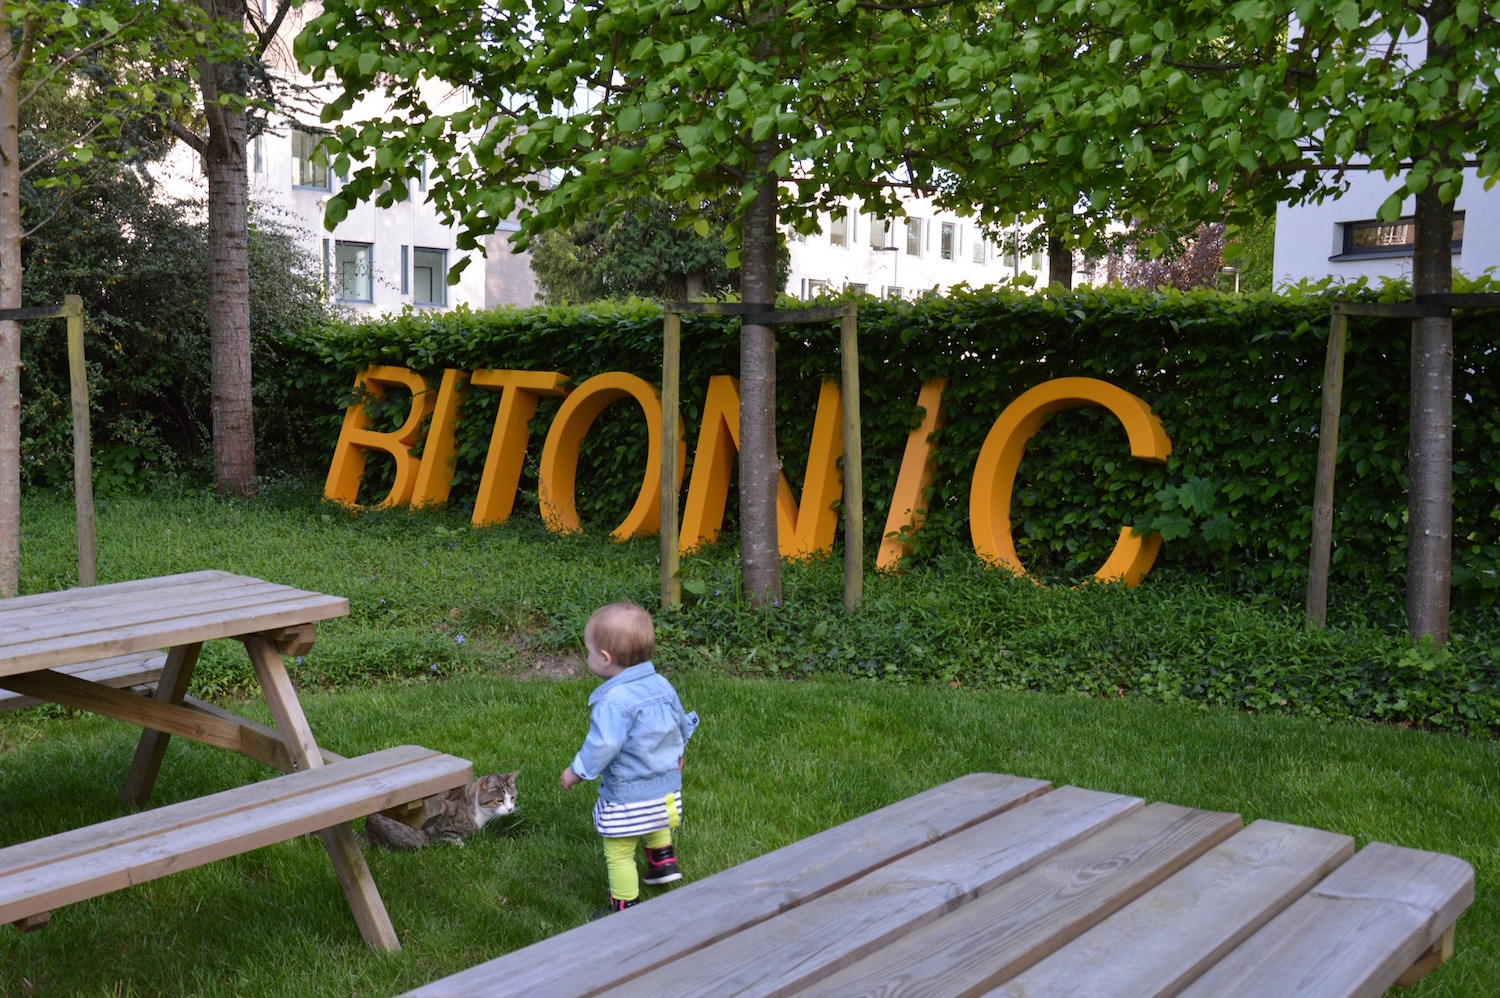 Bitonic BBQ 4-jarig bestaan #bitcoin